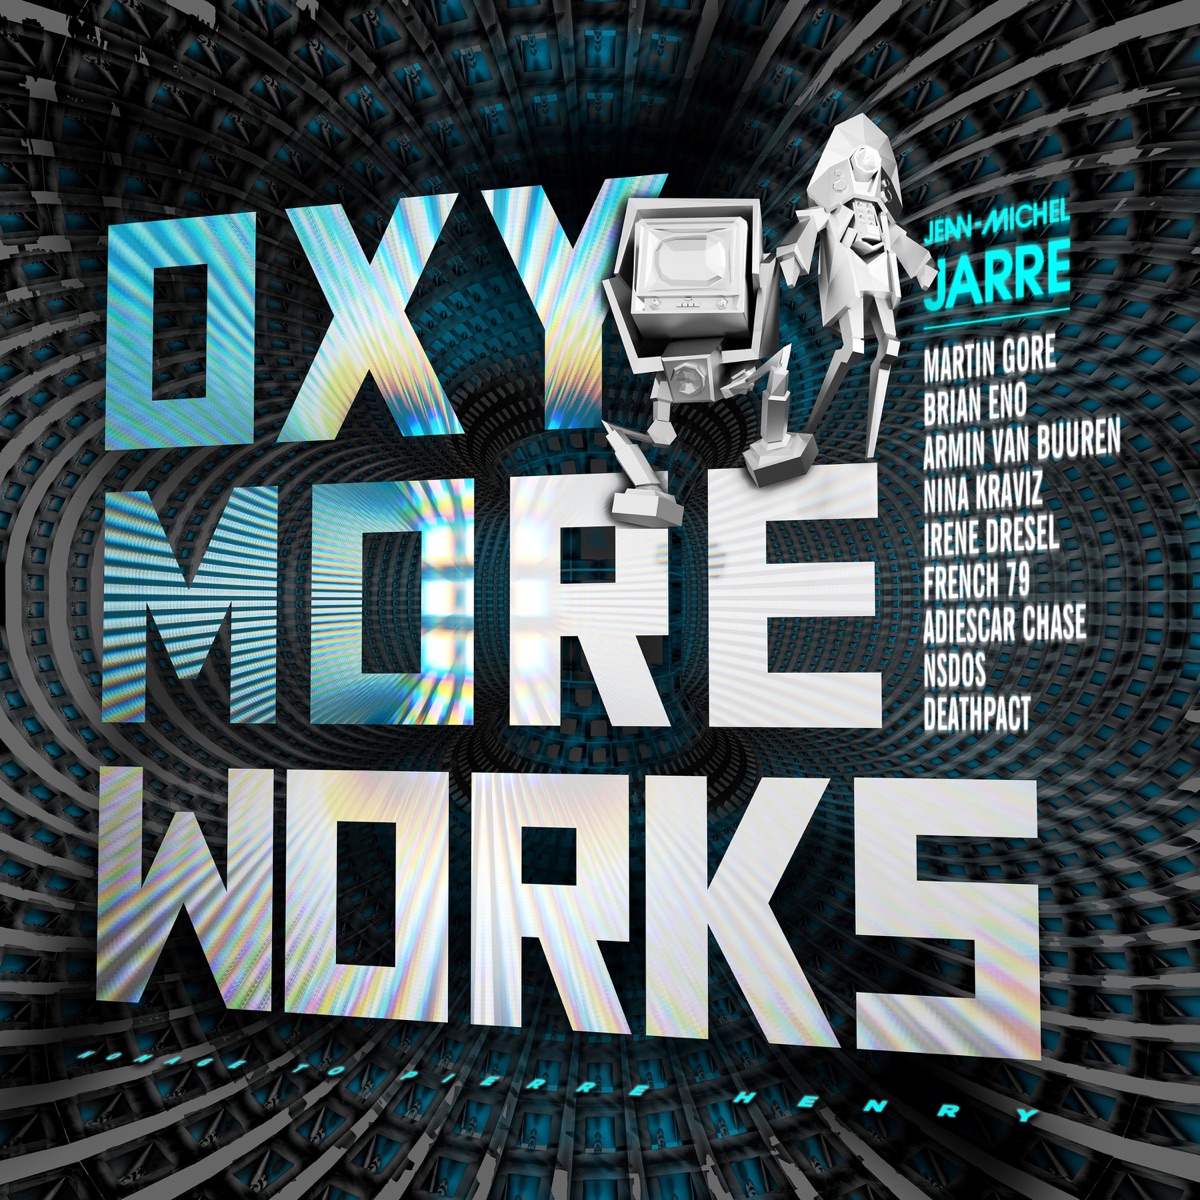 OXYMOREWORKS - Album by Jean-Michel Jarre - Apple Music